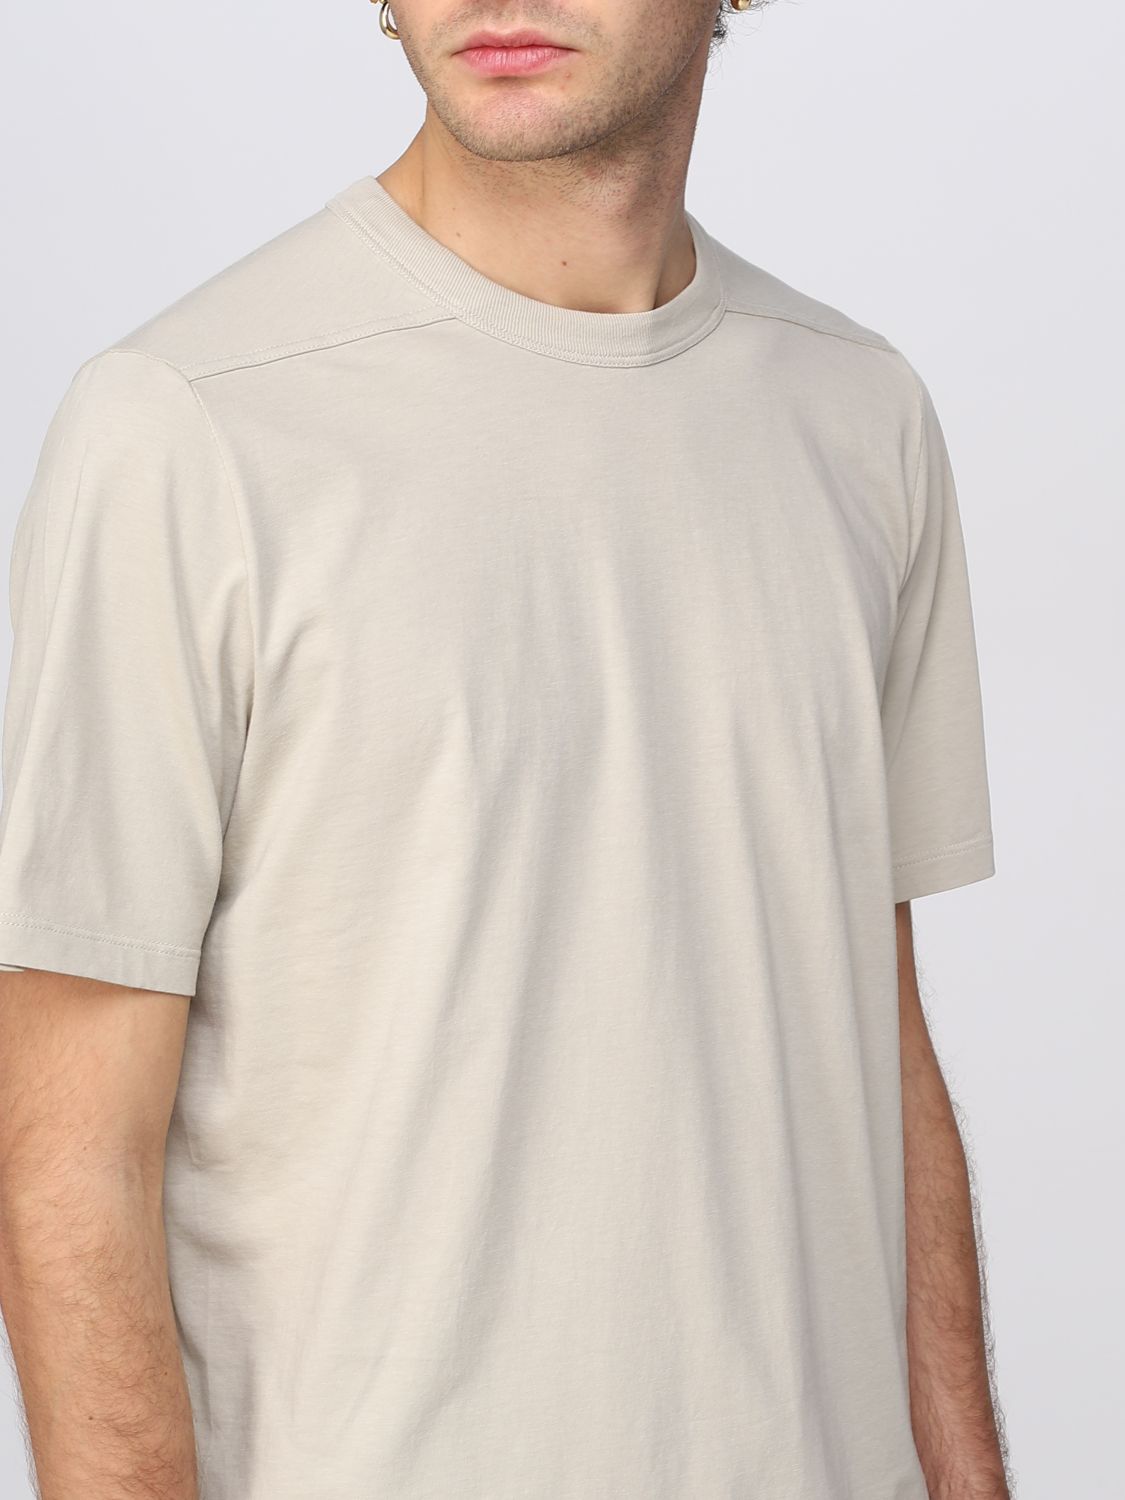 Rick Owens t-shirt for man